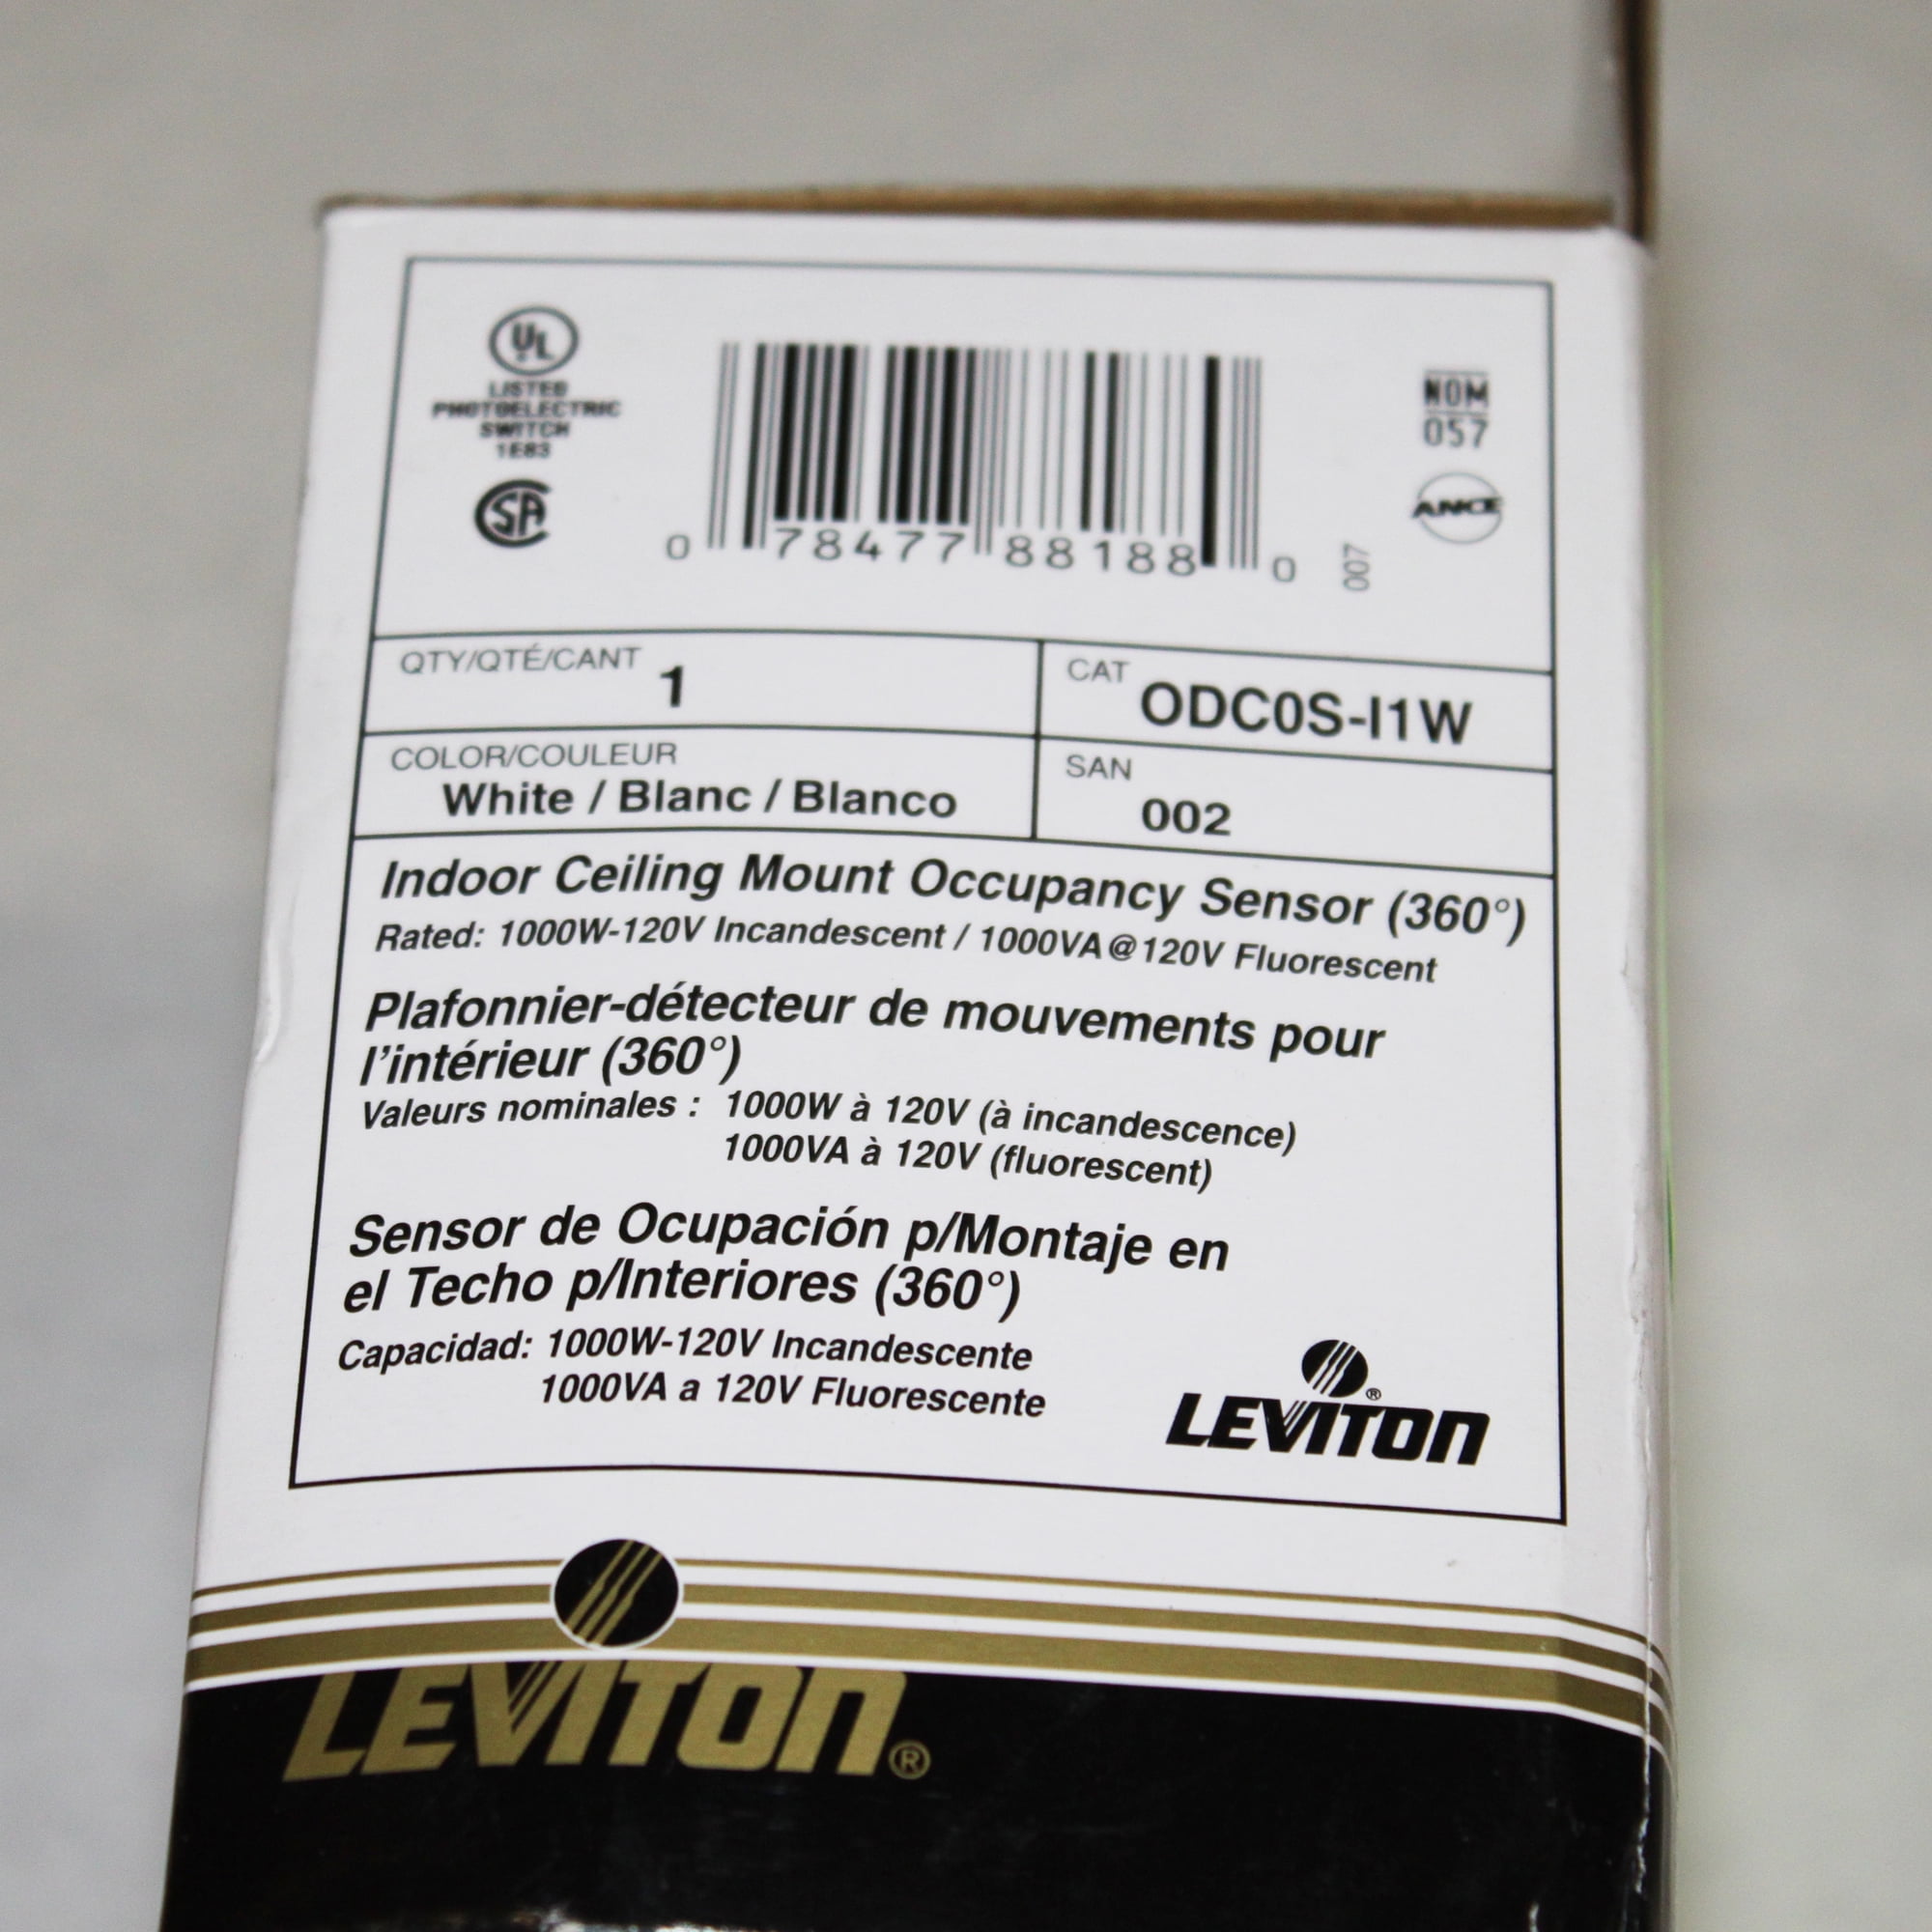 Leviton Odc0s-i1w Indoor Ceiling Occupancy Sensor 360 Degree 120v White for sale online 